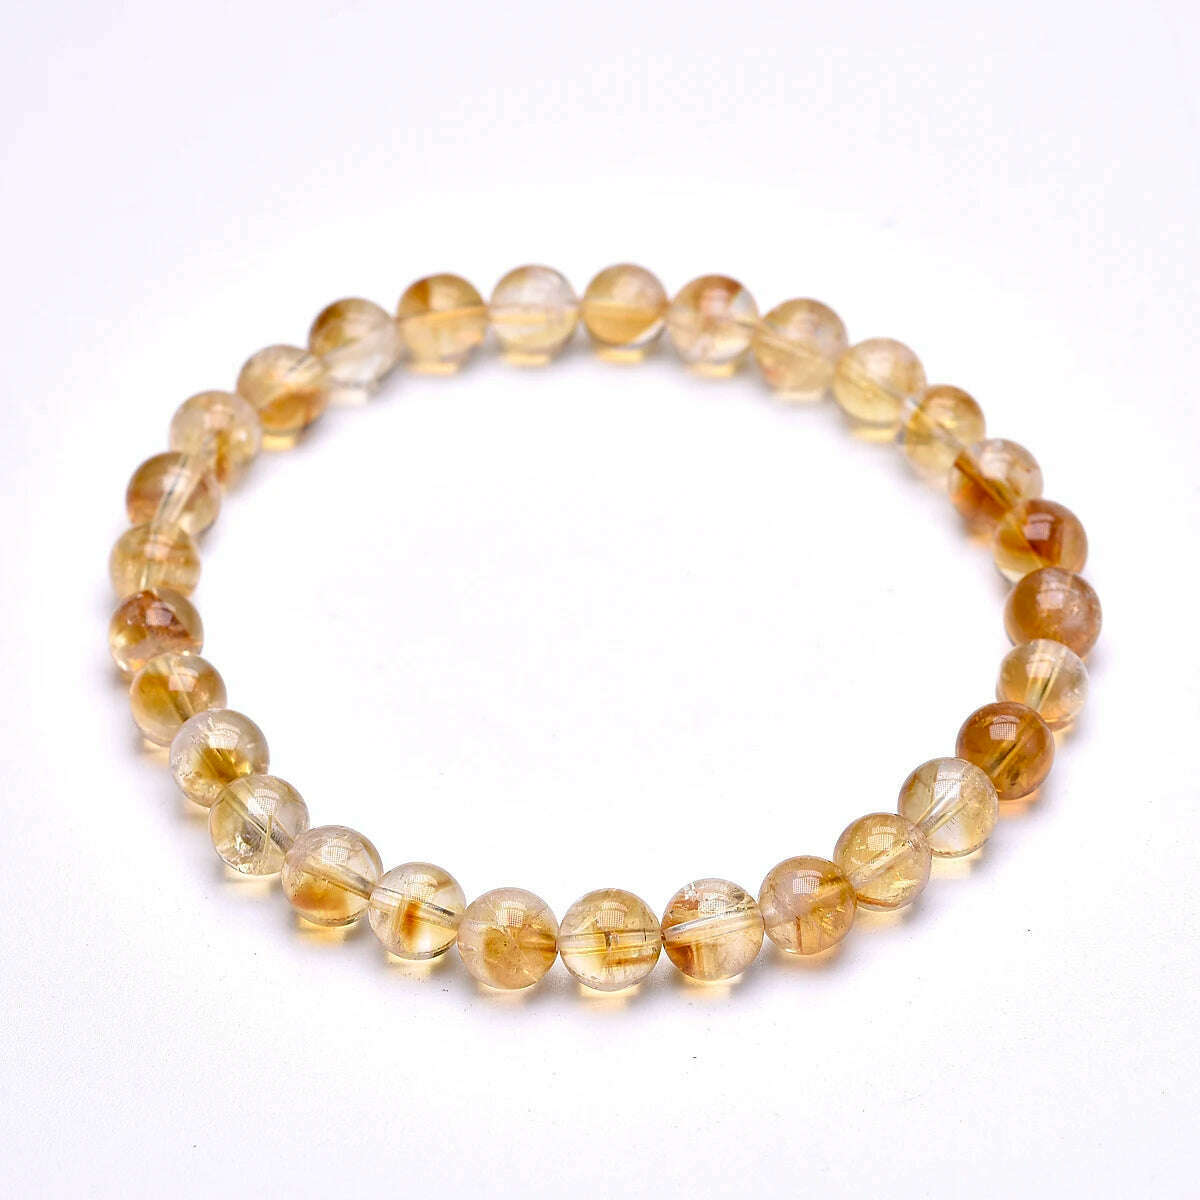 KIMLUD, 3A Natural Reiki Healing Energy Yelllow Citrine Quartz Chakra Meditation Degausst Beads Bracelets For Women Men Lucky Jewelry, Beads 6mm / 16cm, KIMLUD Women's Clothes